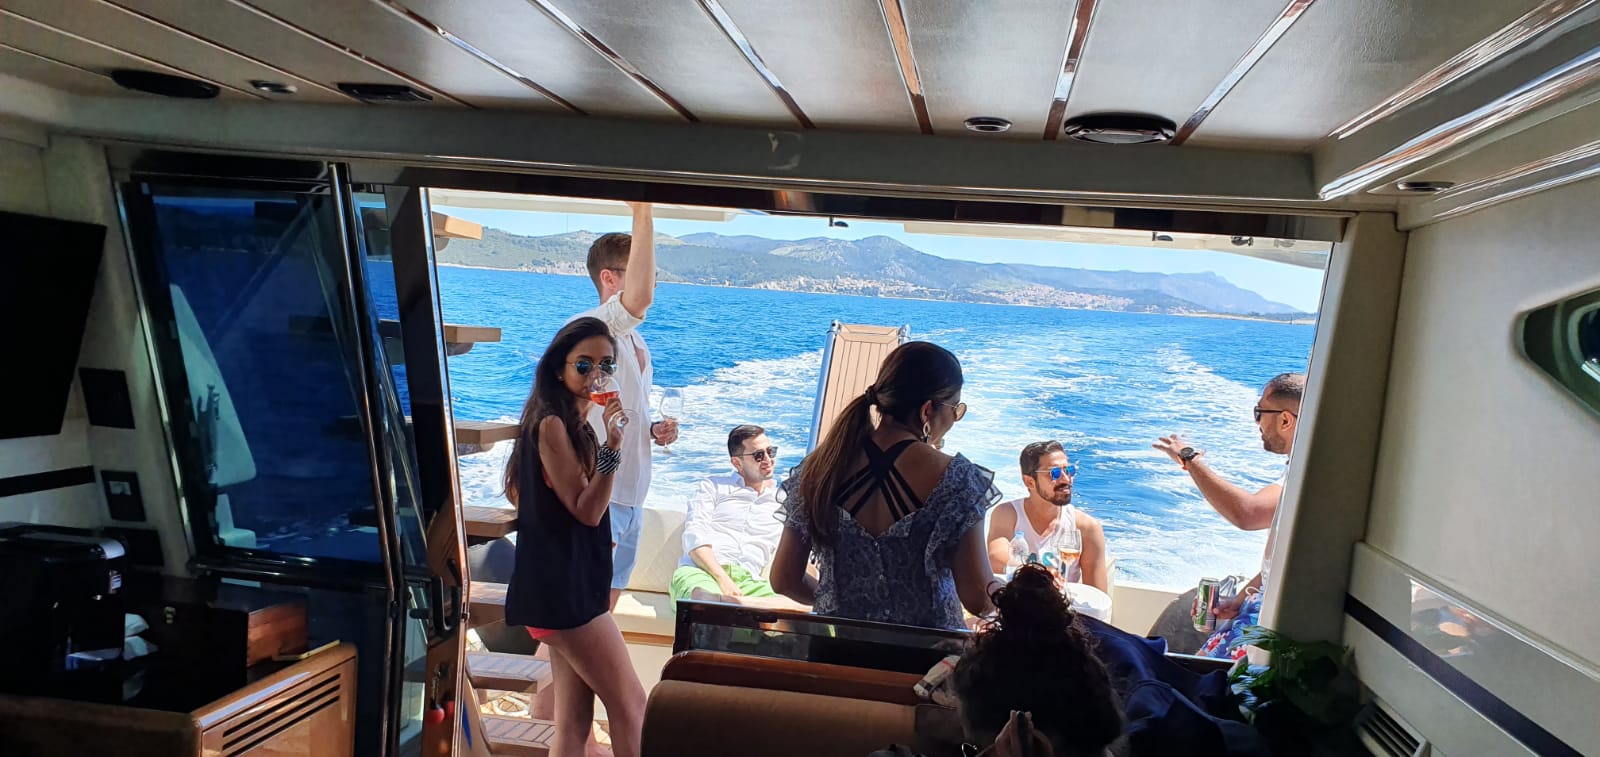 adriatic sea, adriatic sea croatia, croatia dubrovnik, renting a boat dubrovnik, dubrovnik rent a boat, dubrovnik boats